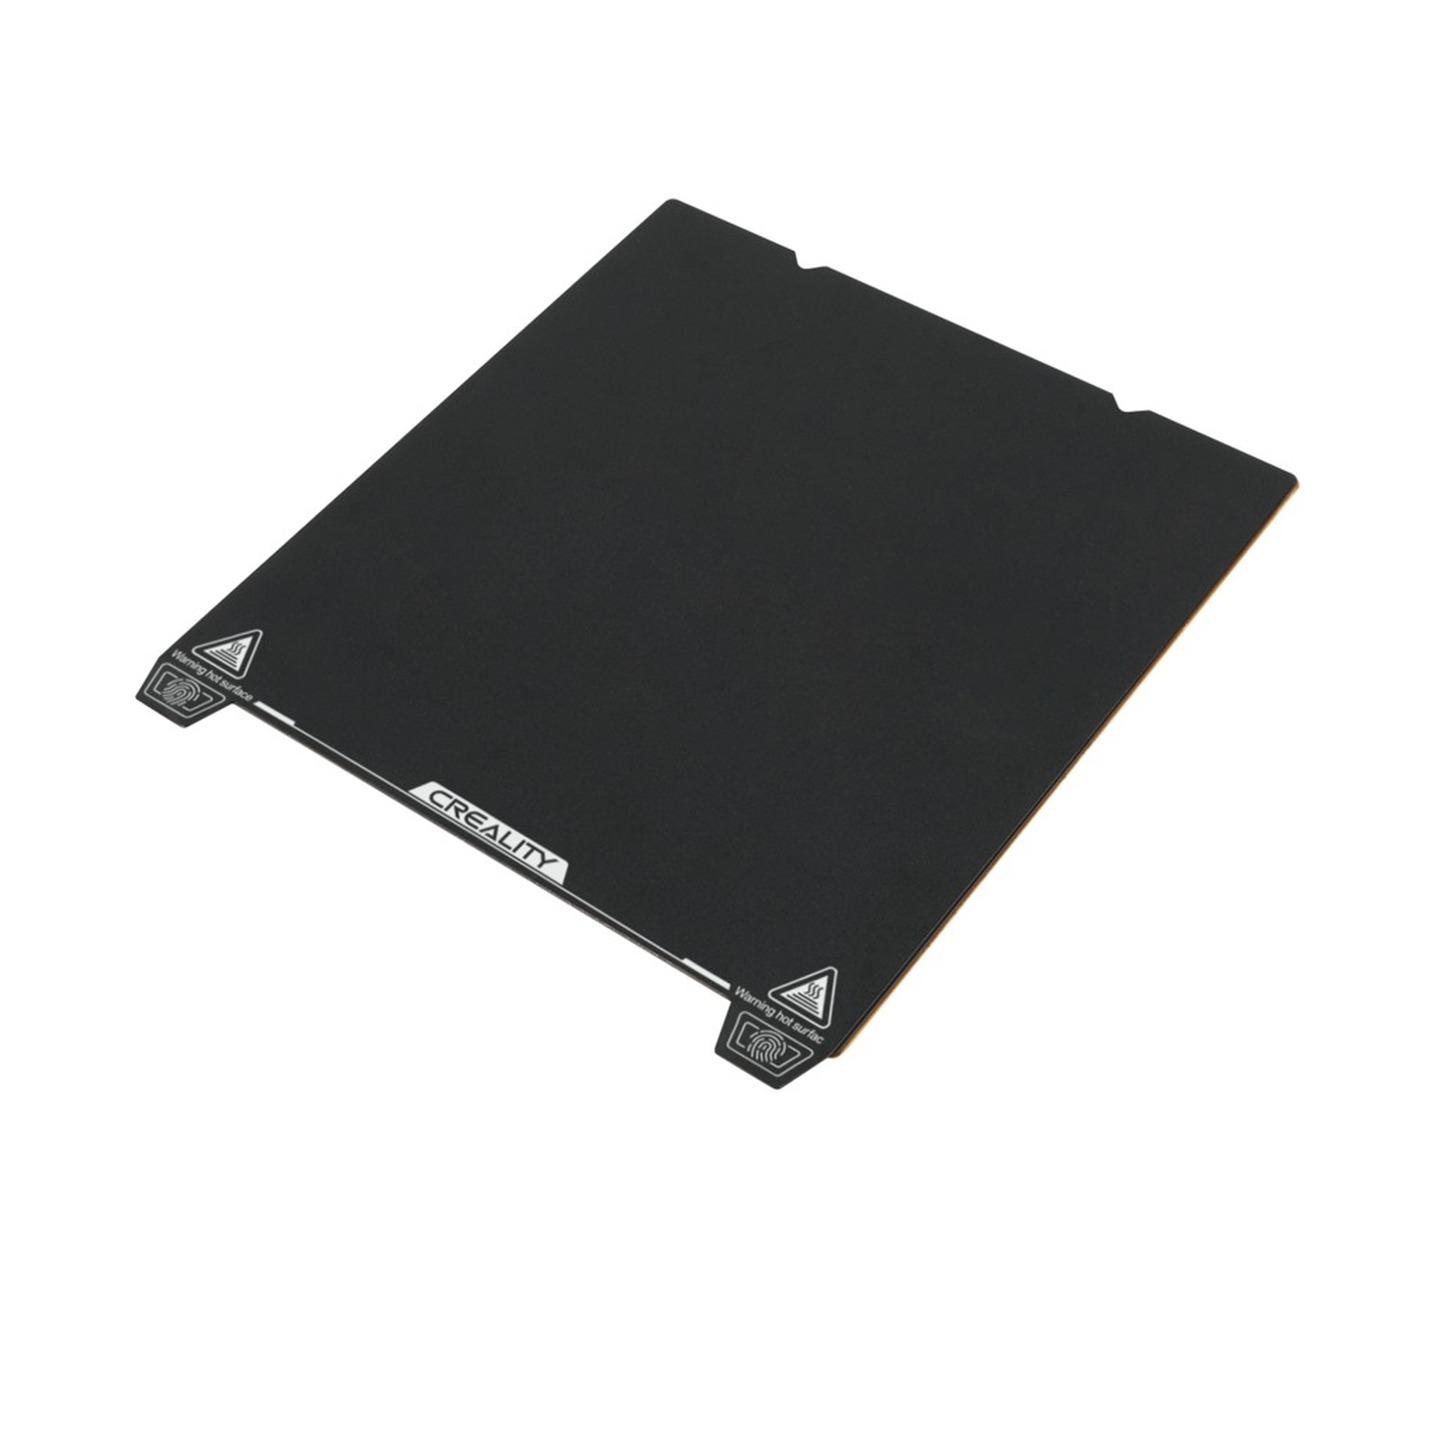 Spring steel PC sticker Kit TL4750/2